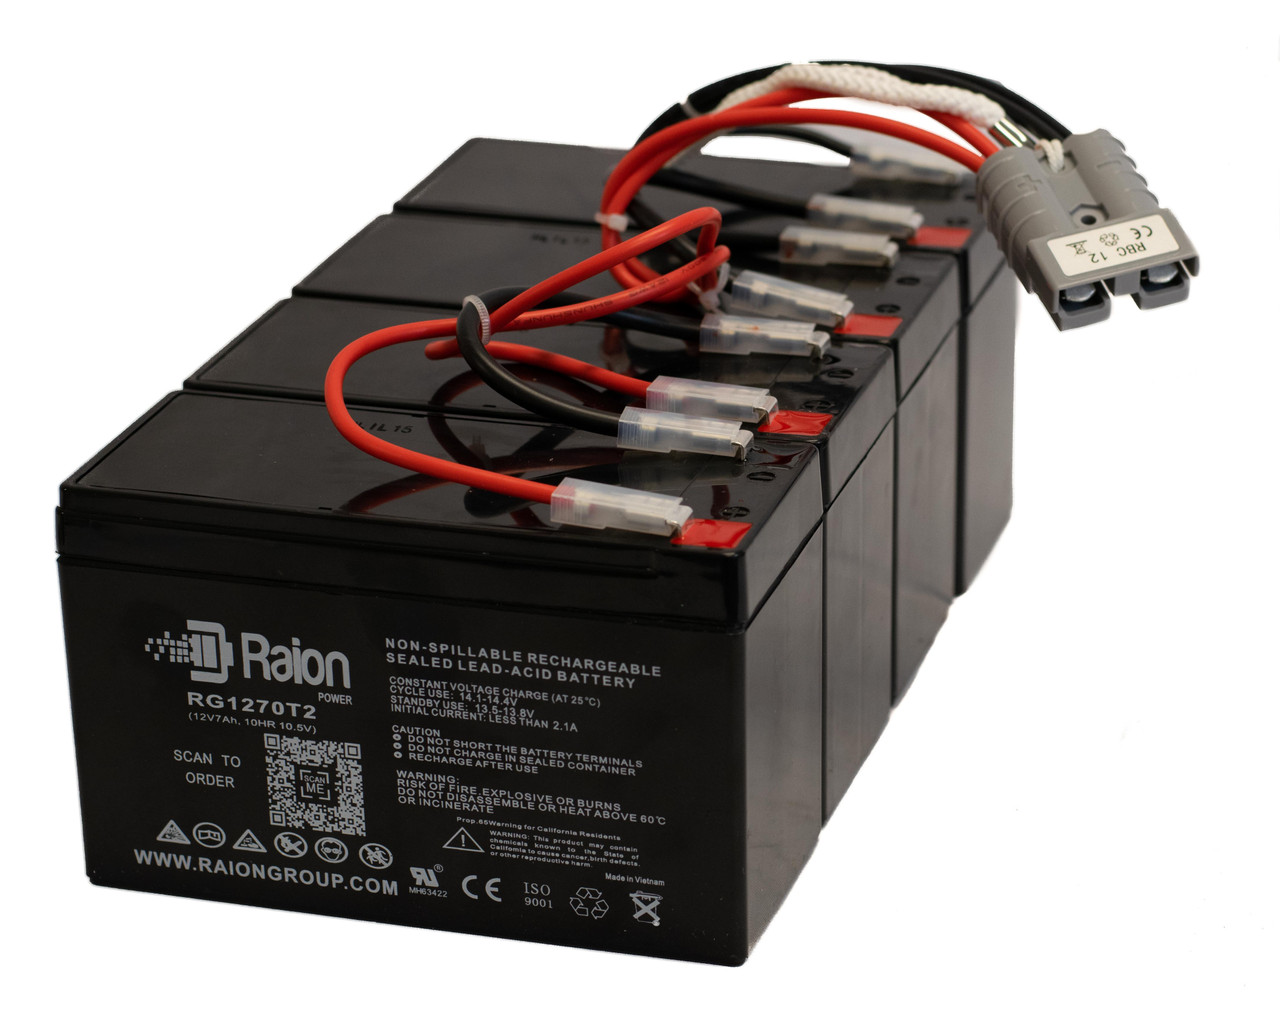 Raion Power Replacement RG-RBC12 Battery Kit for APC Smart-UPS 5000VA w/Transformer 208V SU5000TXFMR